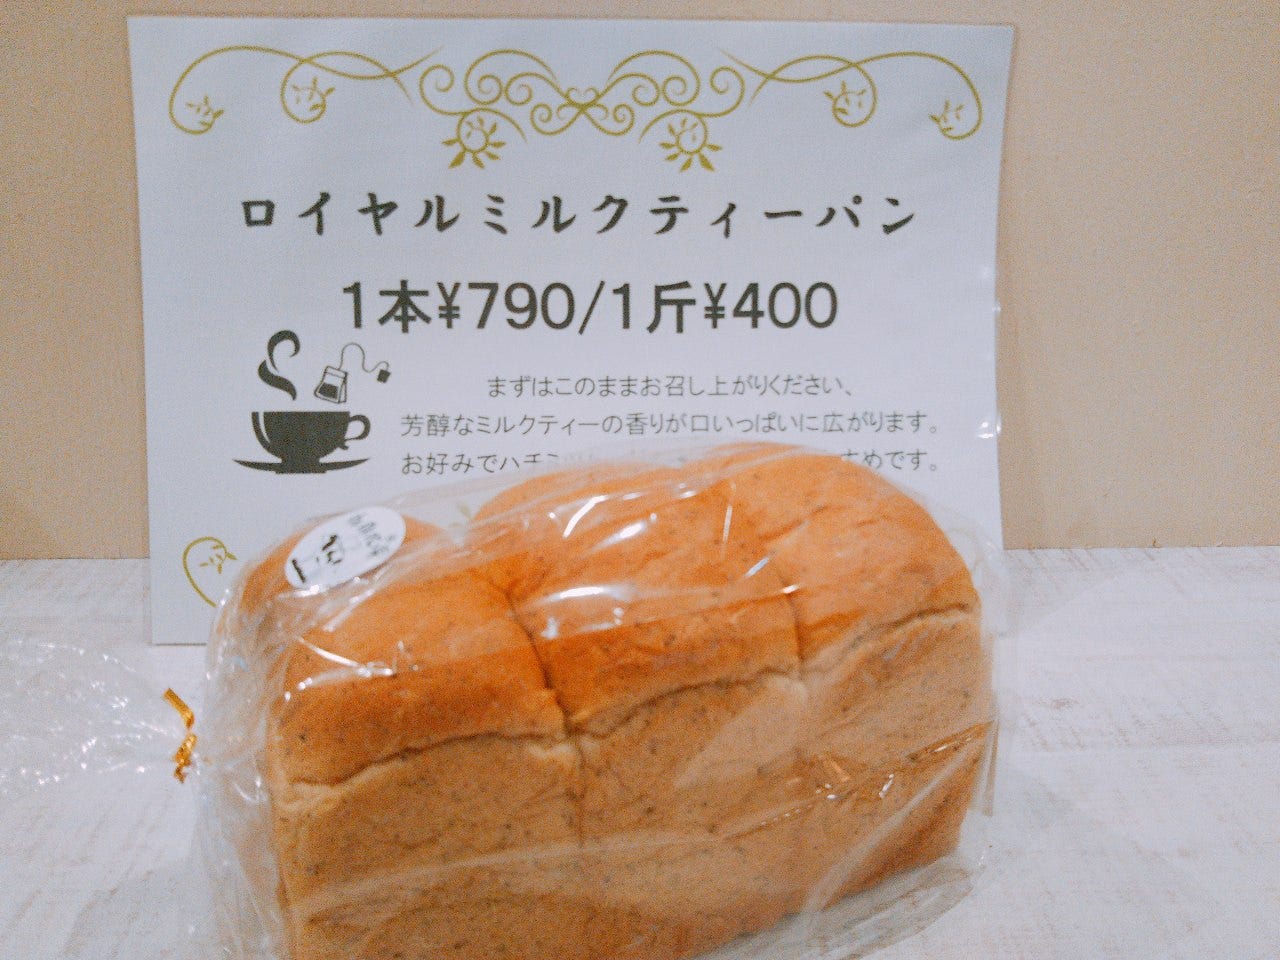 USHIKU GARDEN Bread&Cafe farm(牛久ガーデン)